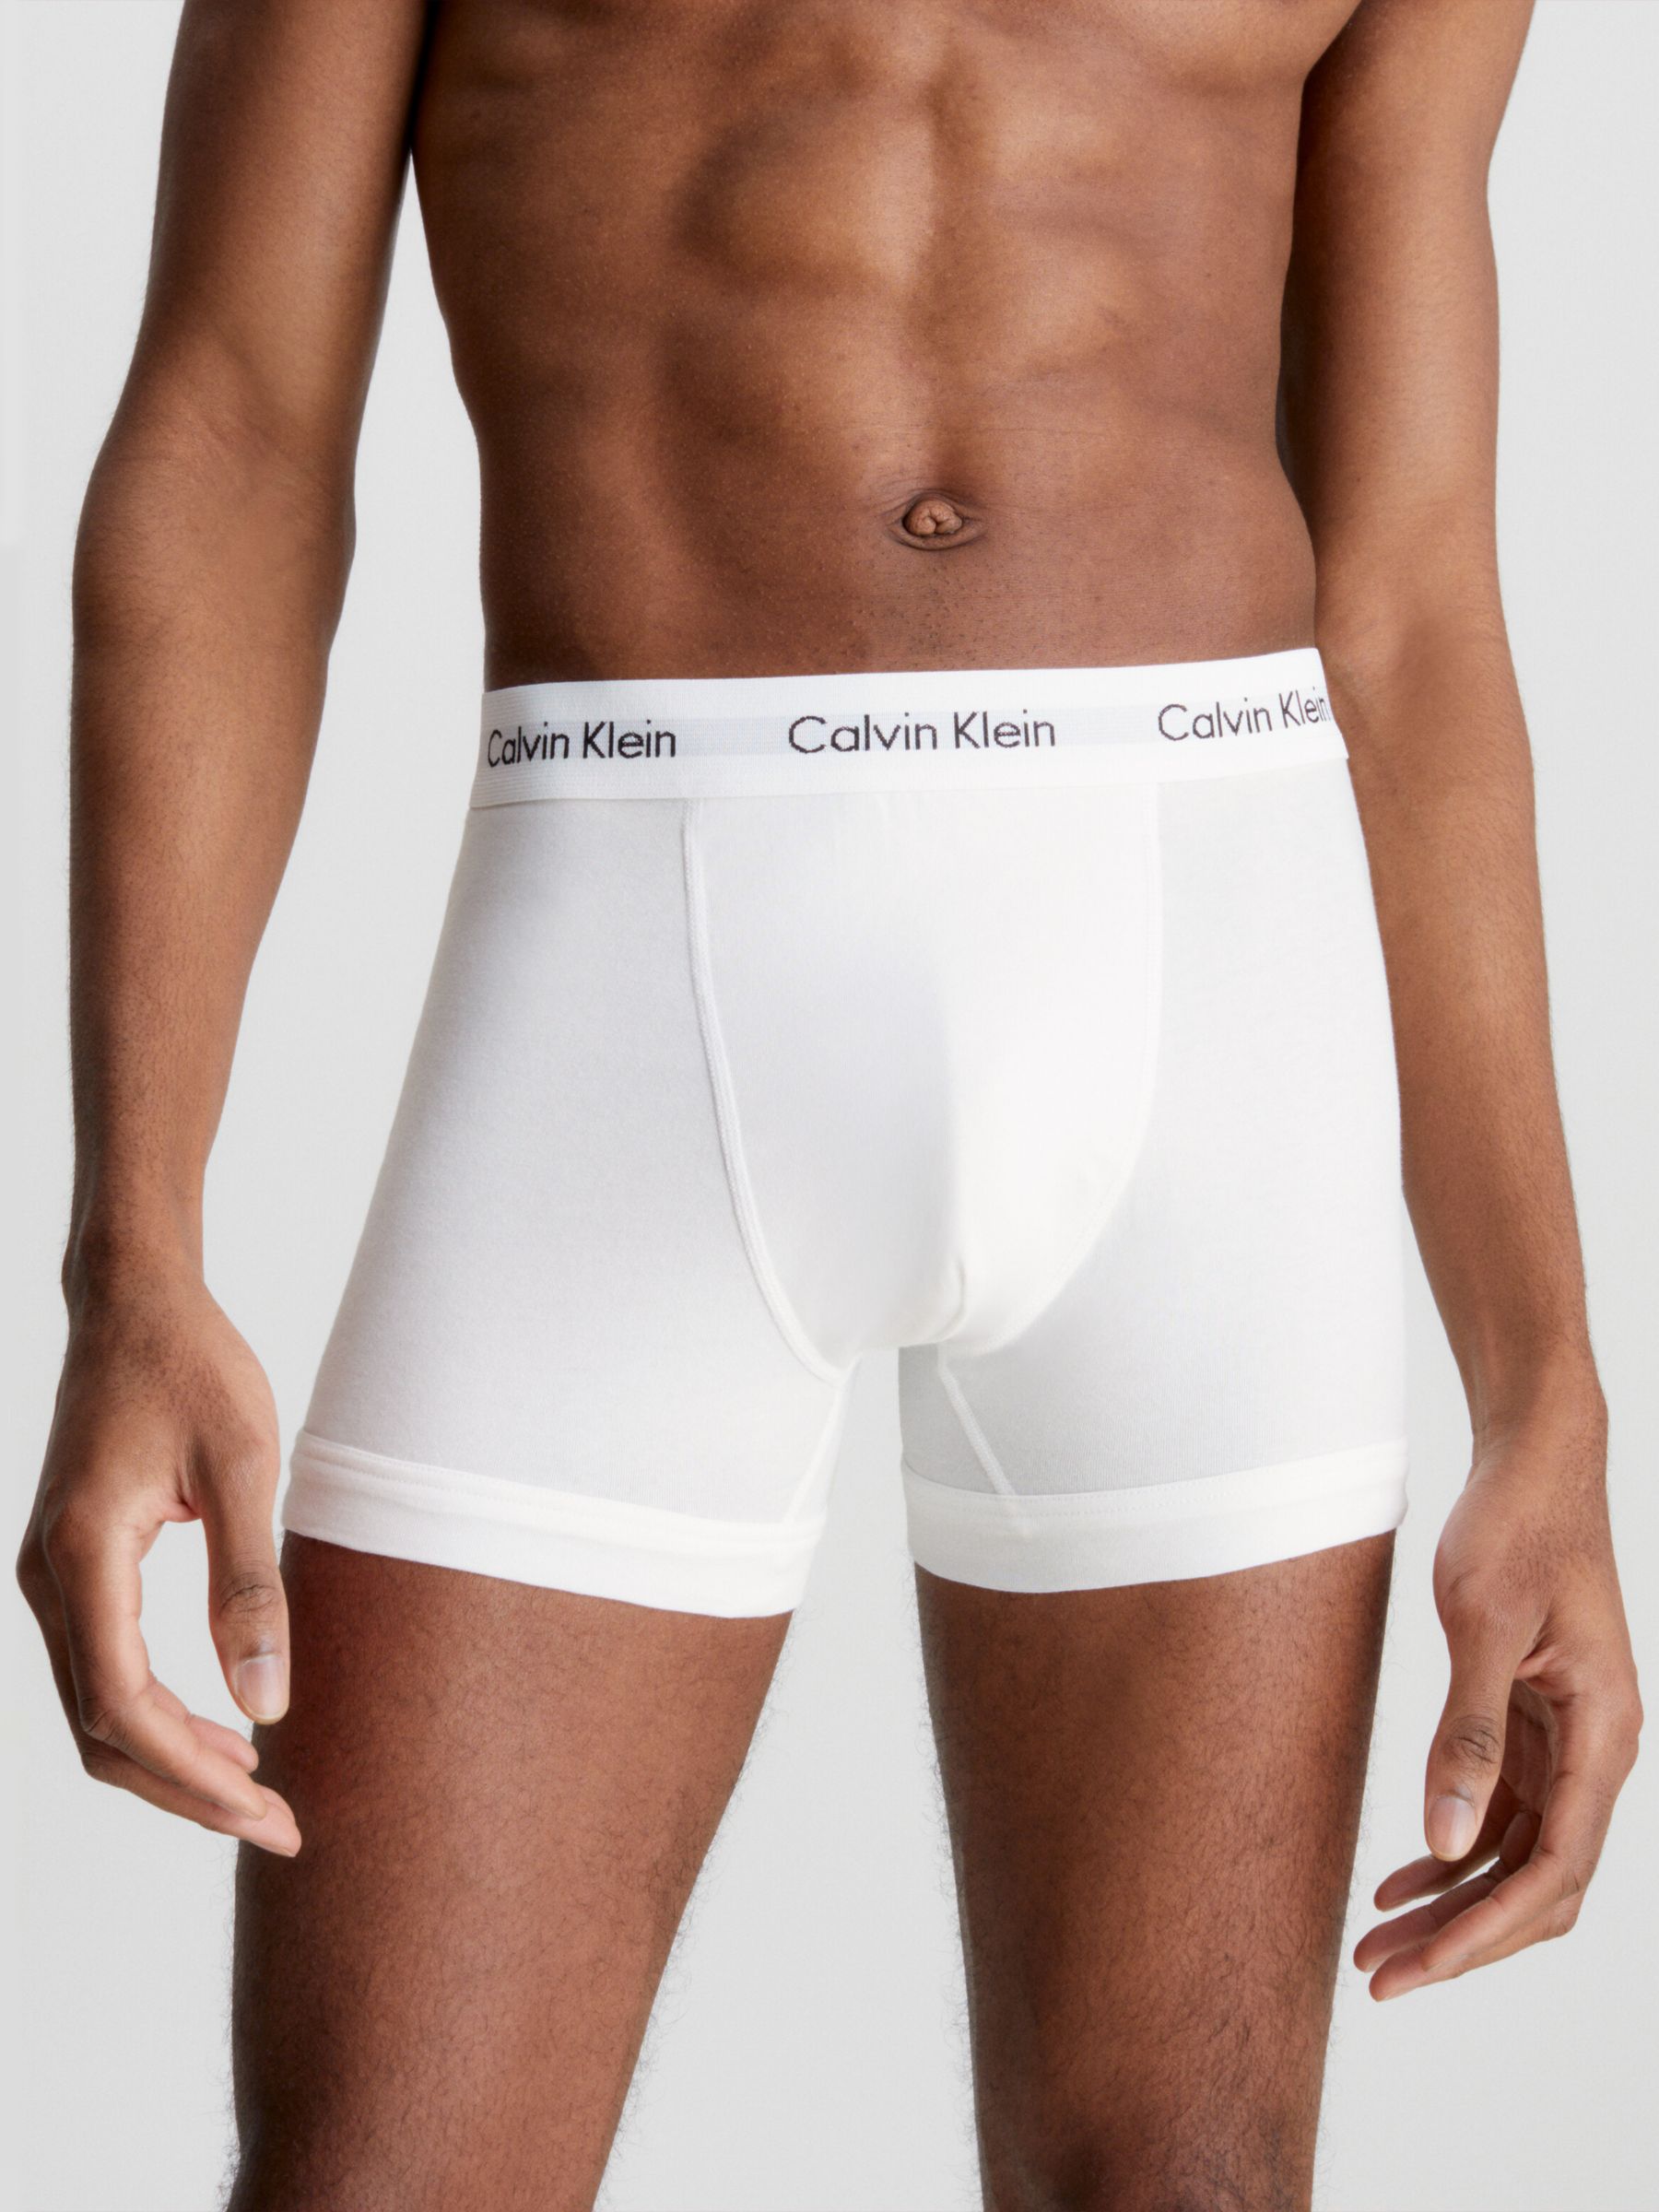 Calvin Klein Regular Cotton Stretch Trunks, Pack of 3, White, XS